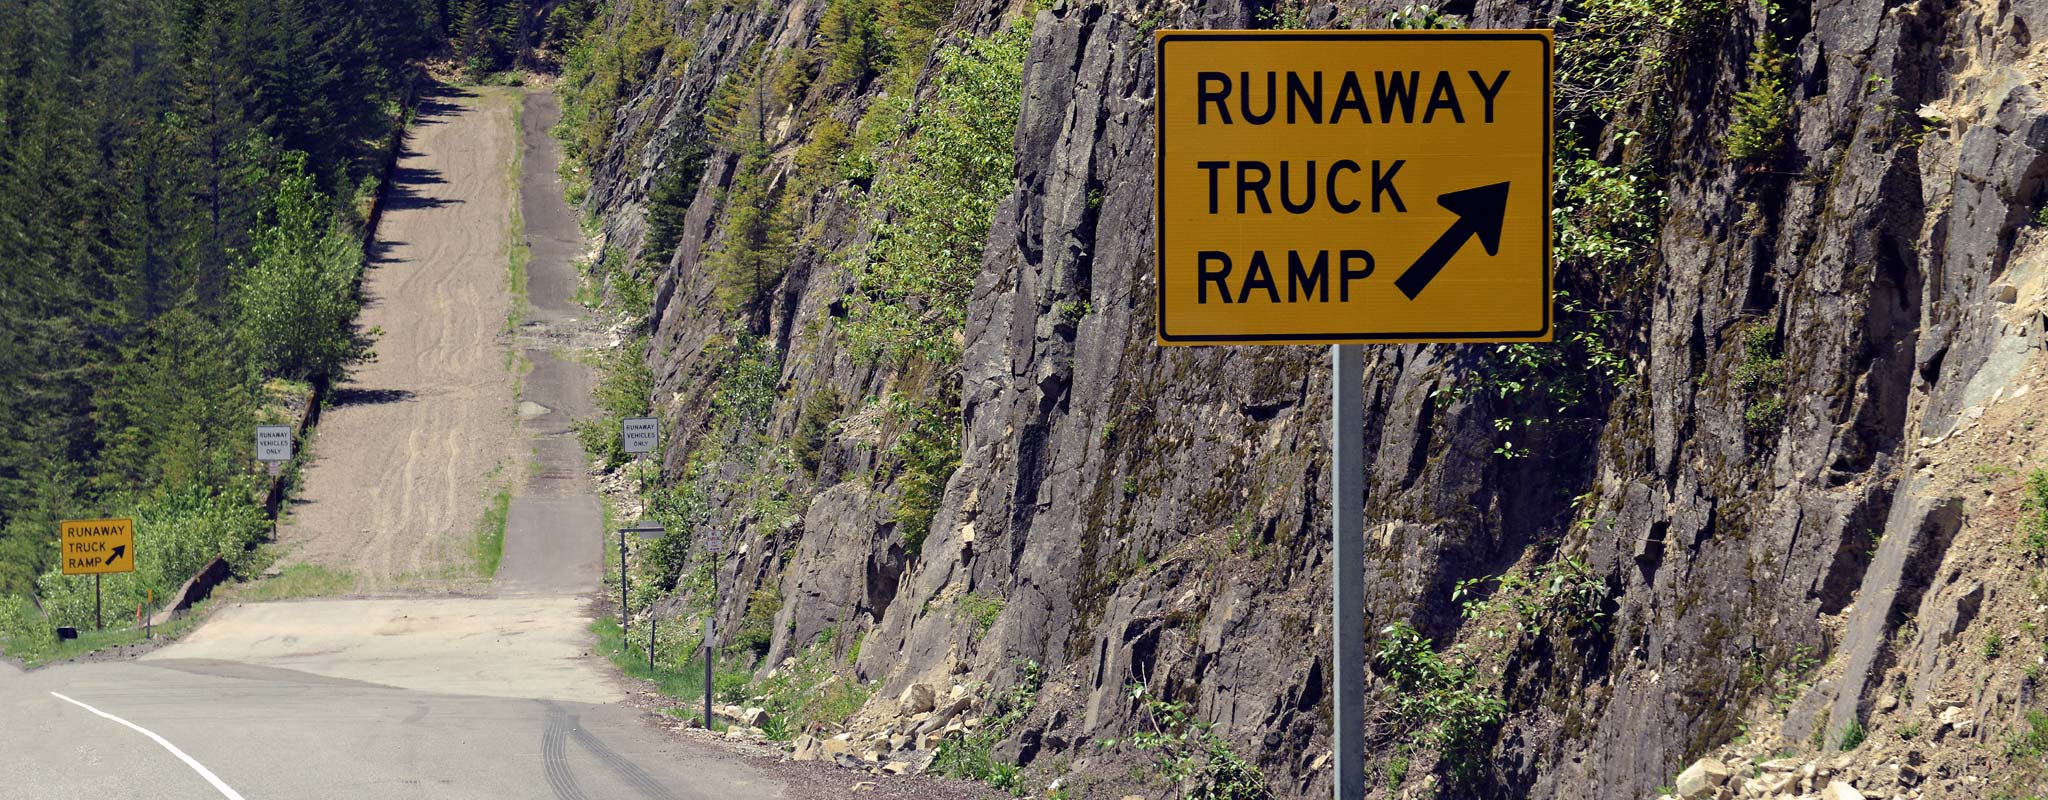 Runaway truck ramp.